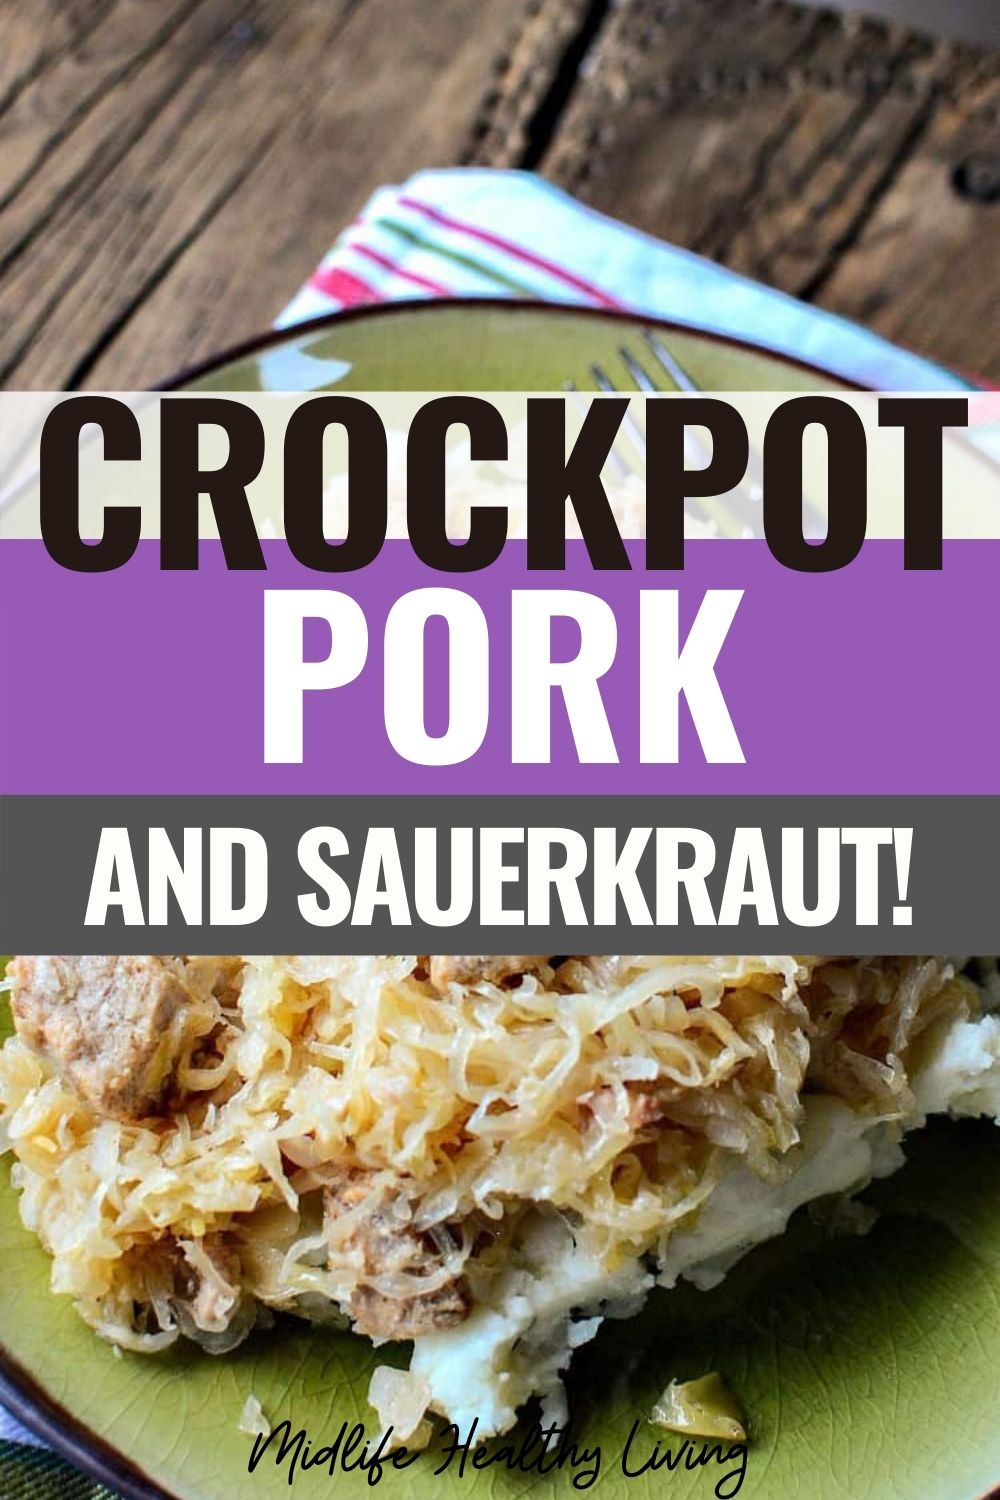 Pin showing the crockpot pork and sauerkraut ready to eat.